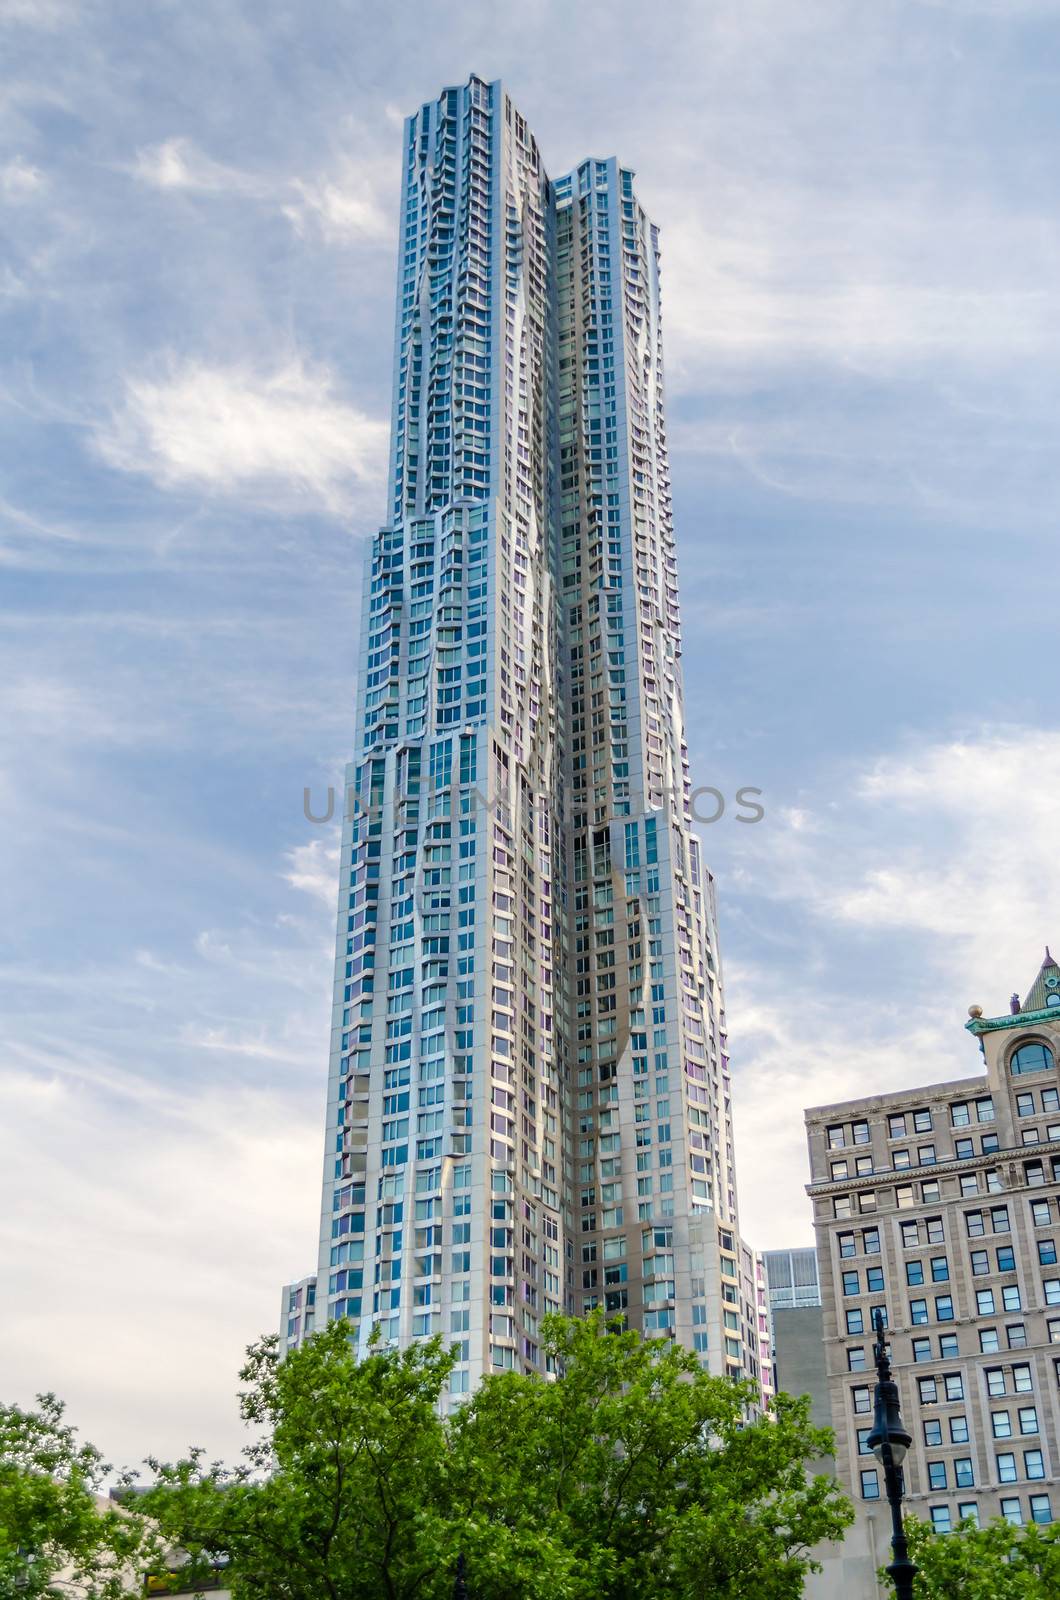 Beekman Tower aka New York by Gehry, Manhattan by marcorubino